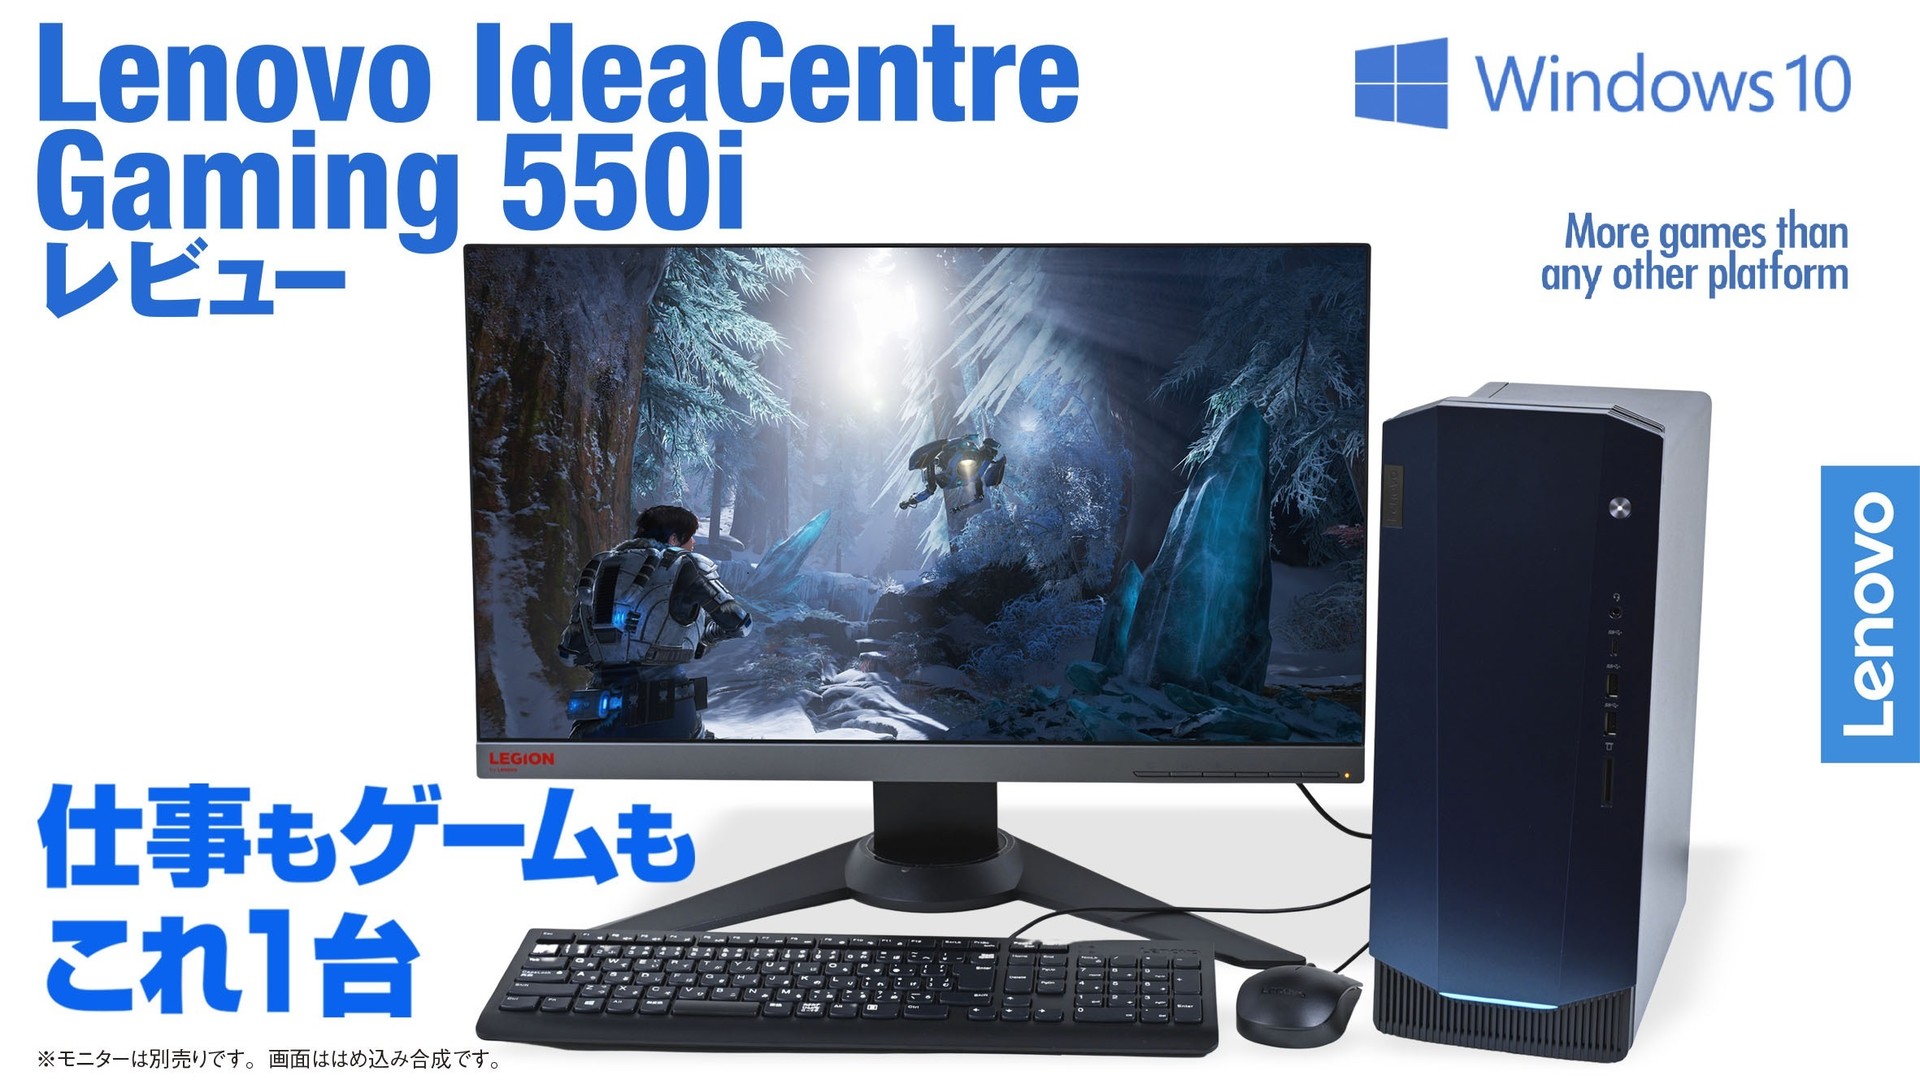 Lenovo IdeaCentre Gaming 550i”レビュー。多彩な用途を意識したLenovo